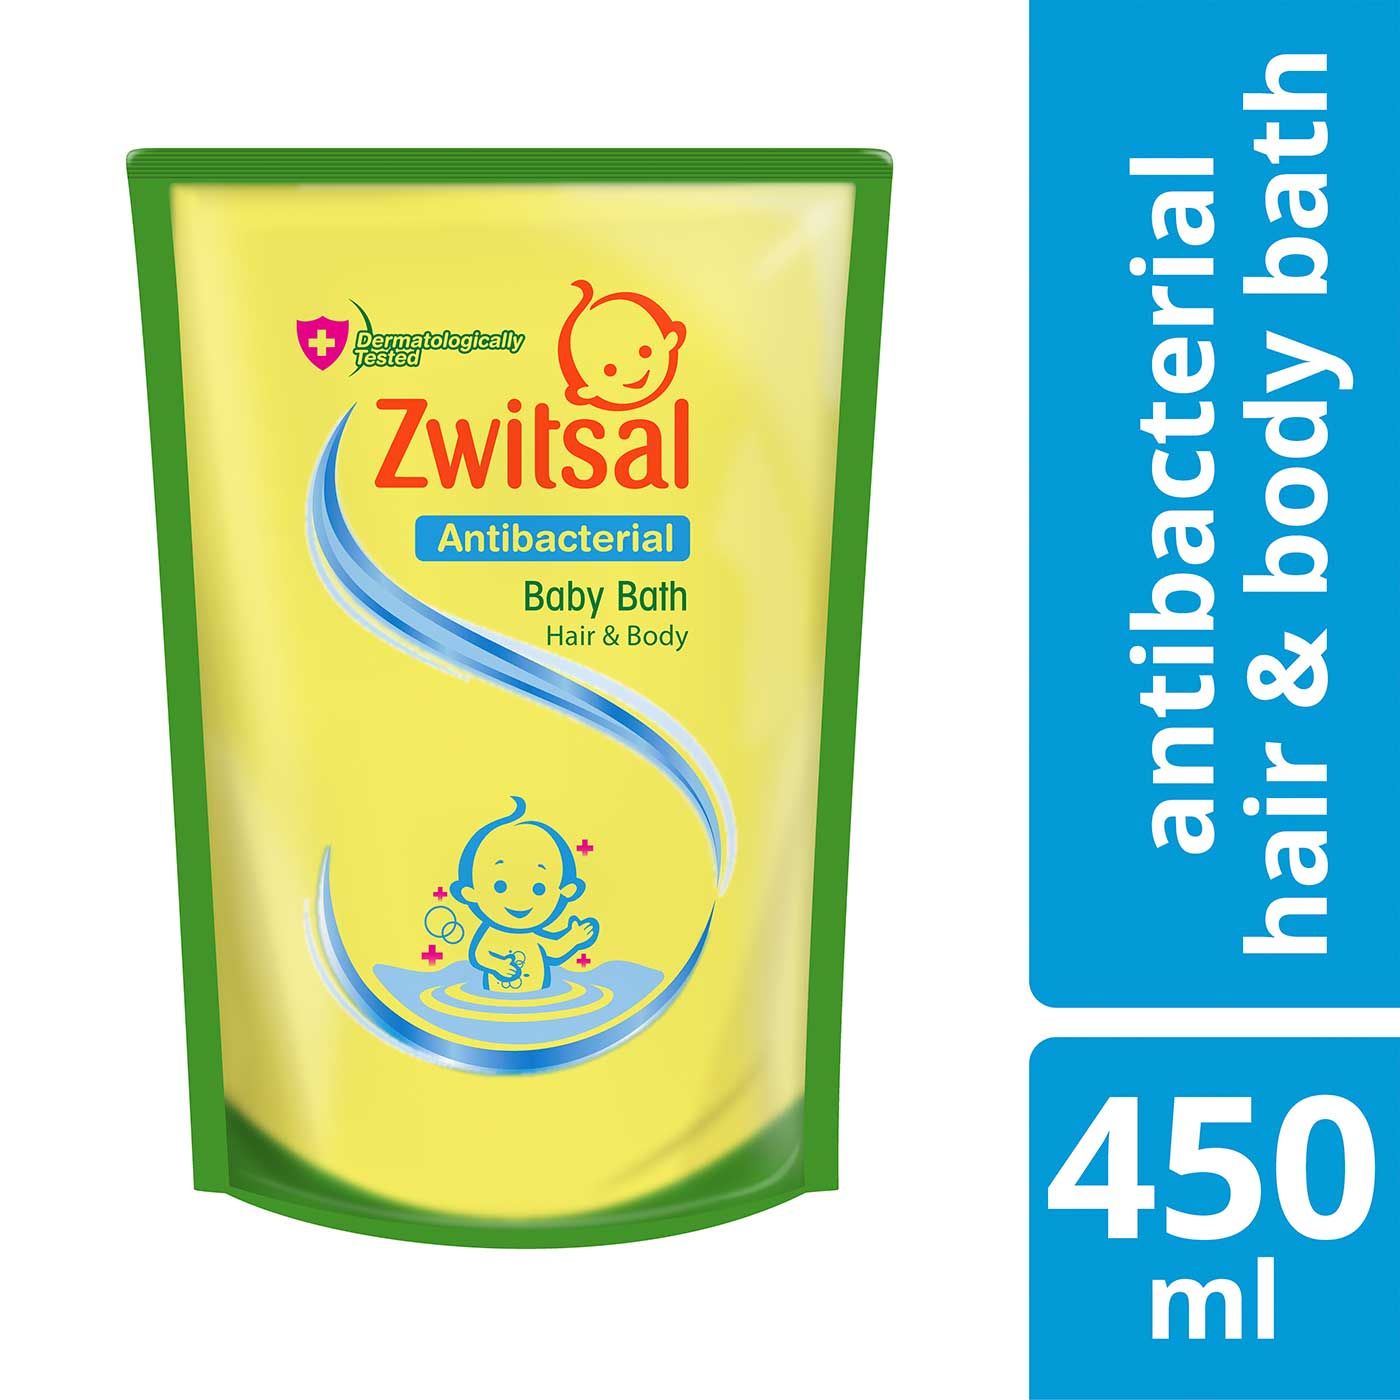 Zwitsal Baby Bath Hair & Body Antibacterial 450ml - 1